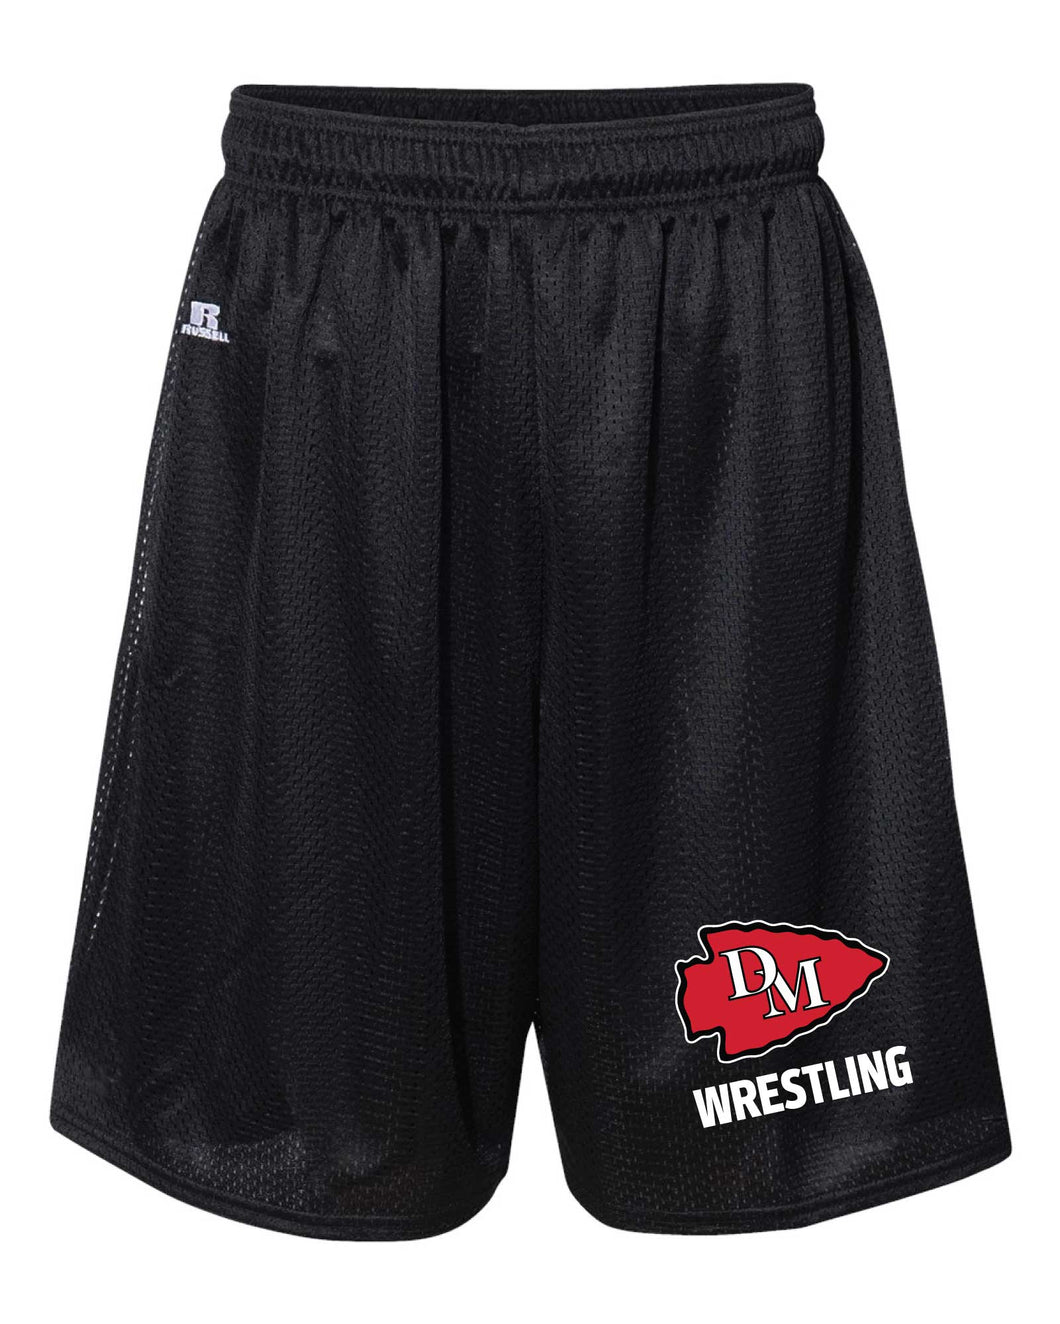 DM Wrestling Russell Athletic Tech Shorts - Black - 5KounT